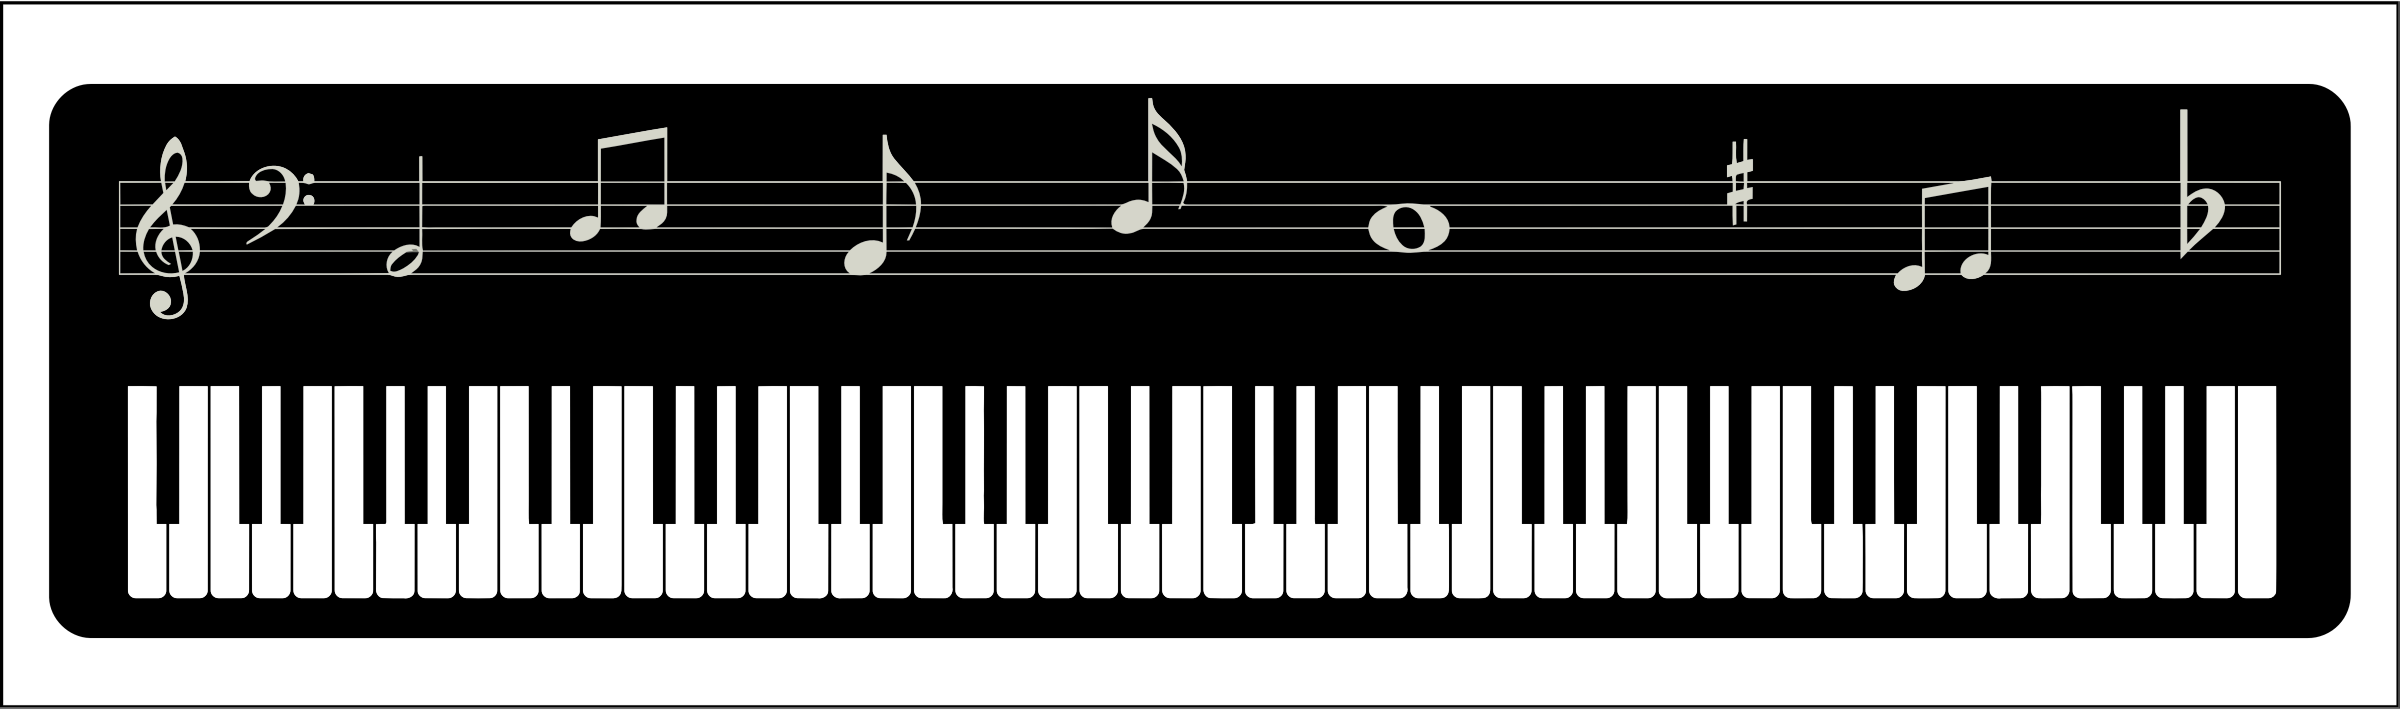 Digital Music Keyboard PNG Image